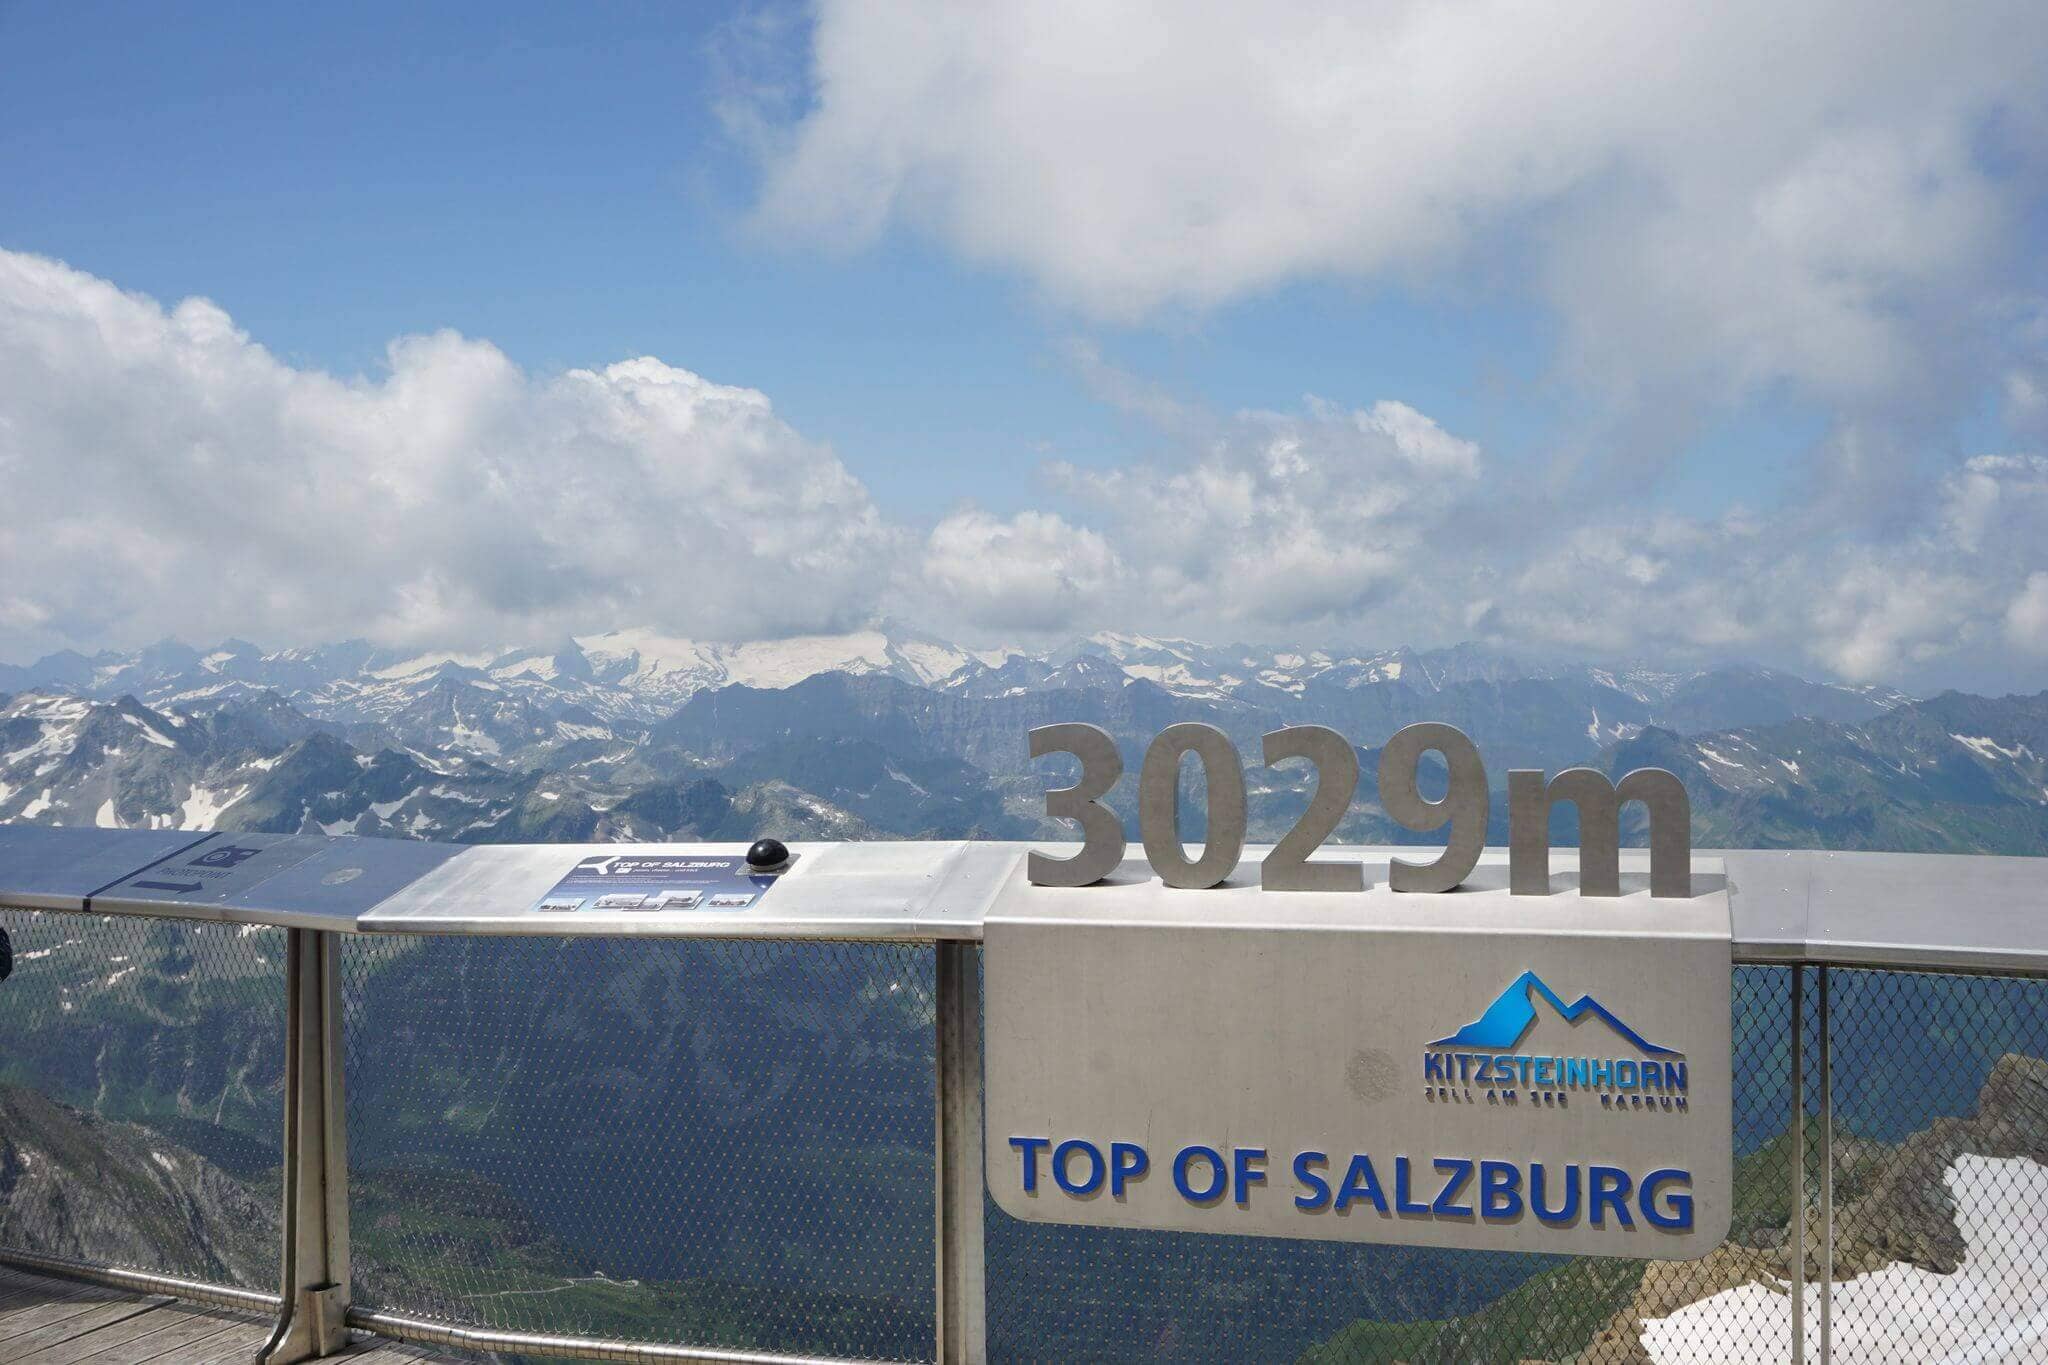 Alpy 3029 metrů vysoko, 202kB